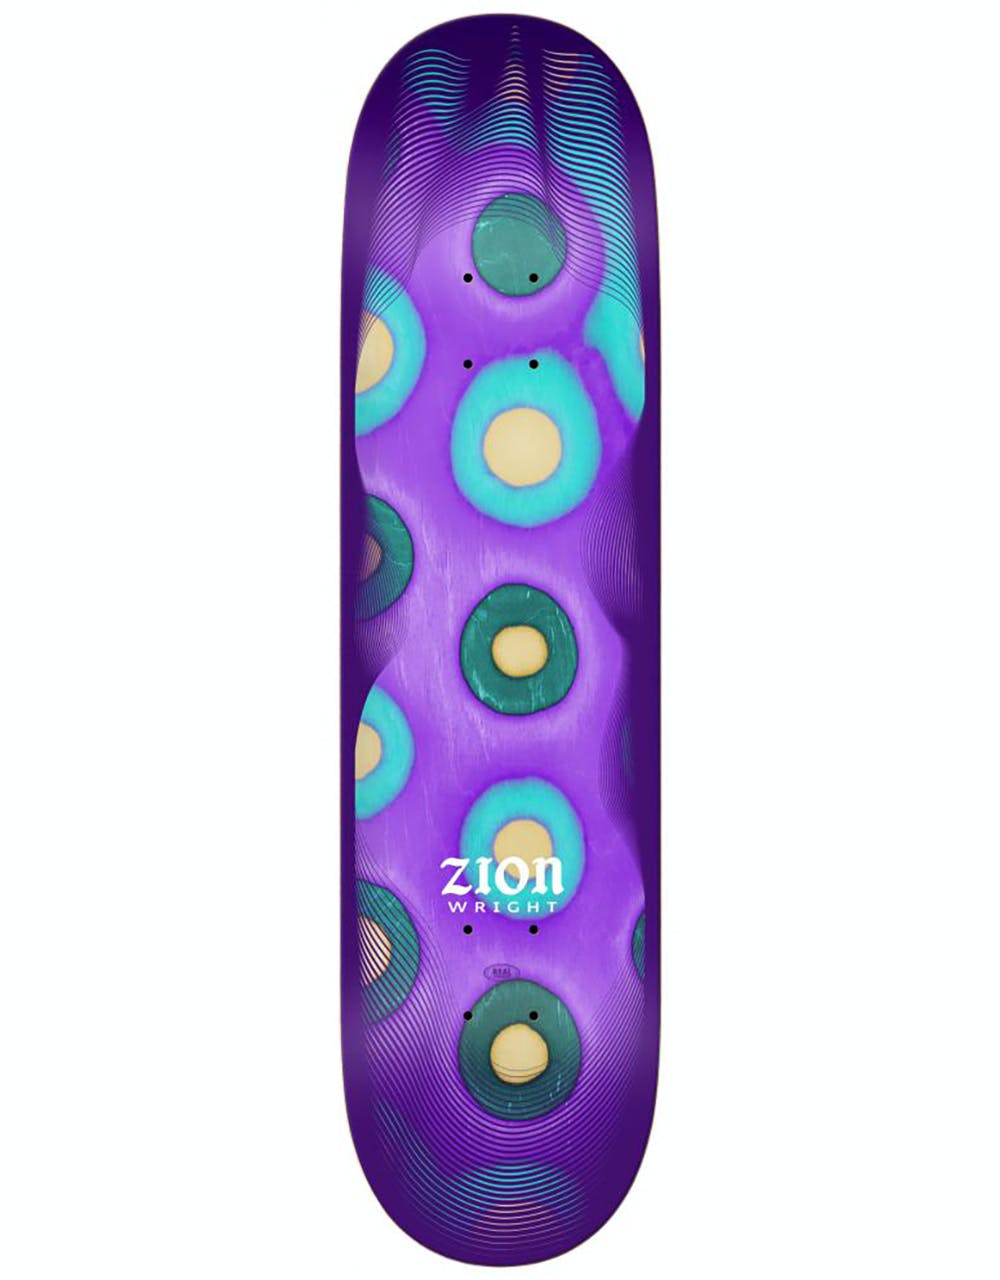 Real Zion Eclipse Ltd Skateboard Deck - 8.5"